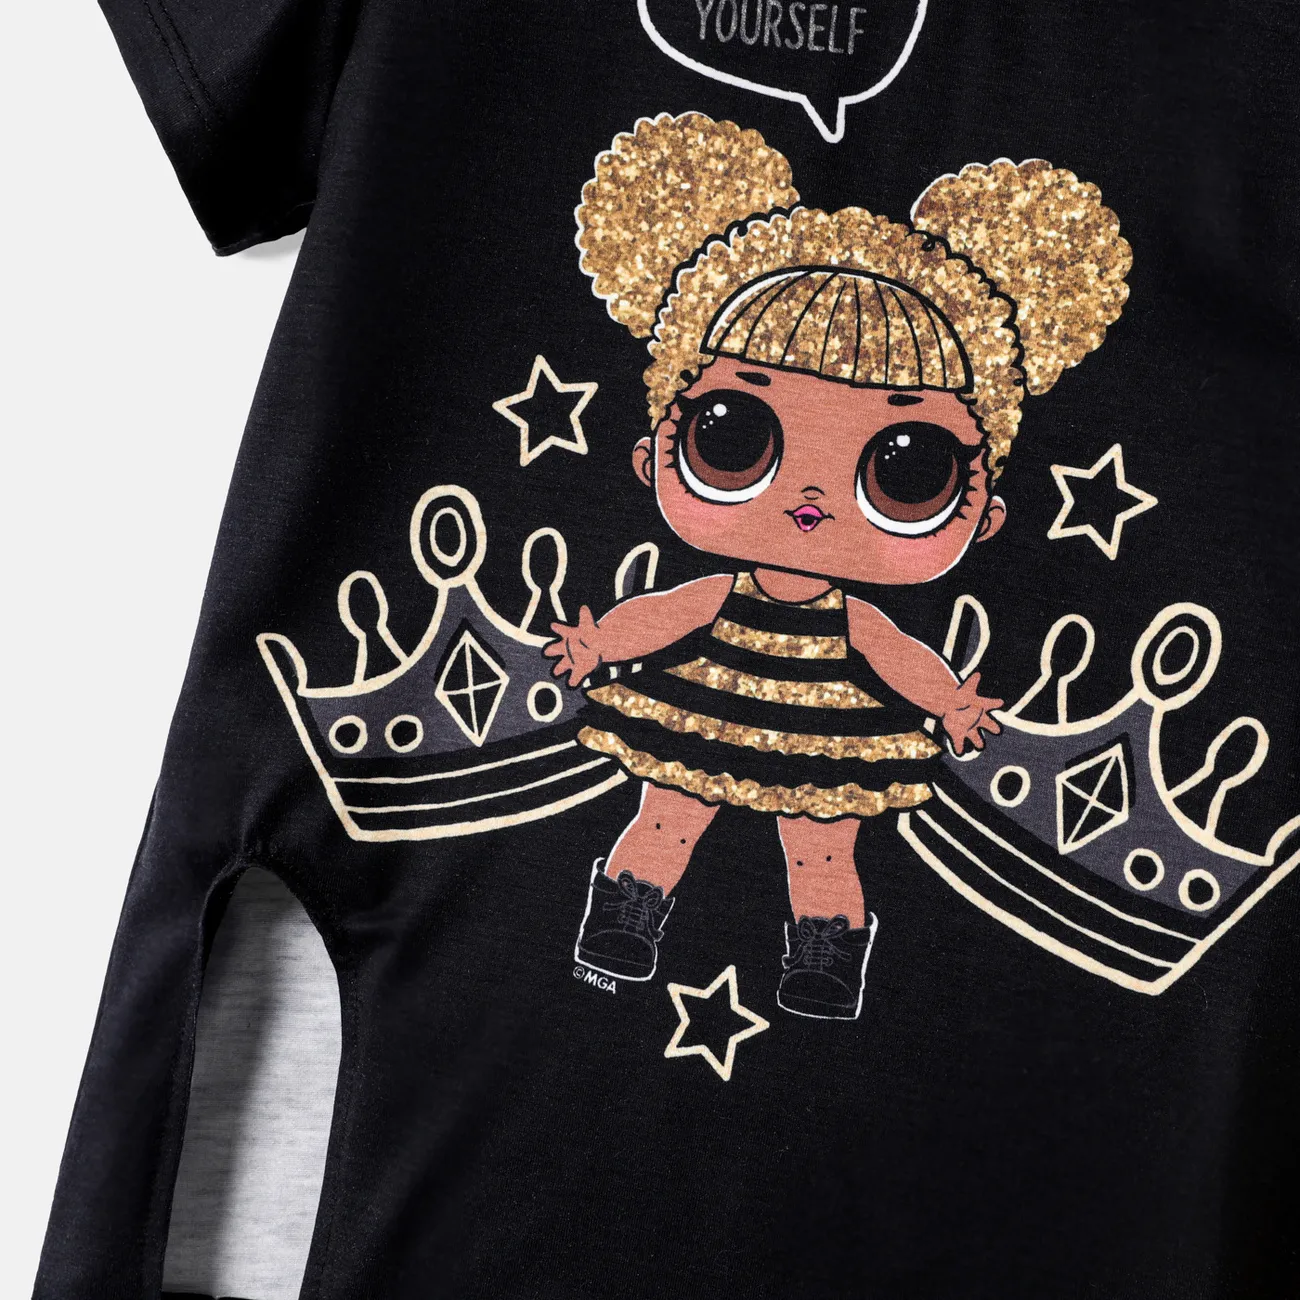 L.O.L. SURPRISE! Toddler/Kid Girl/Boy Character Print Tee and Cotton Shorts Set Black big image 1